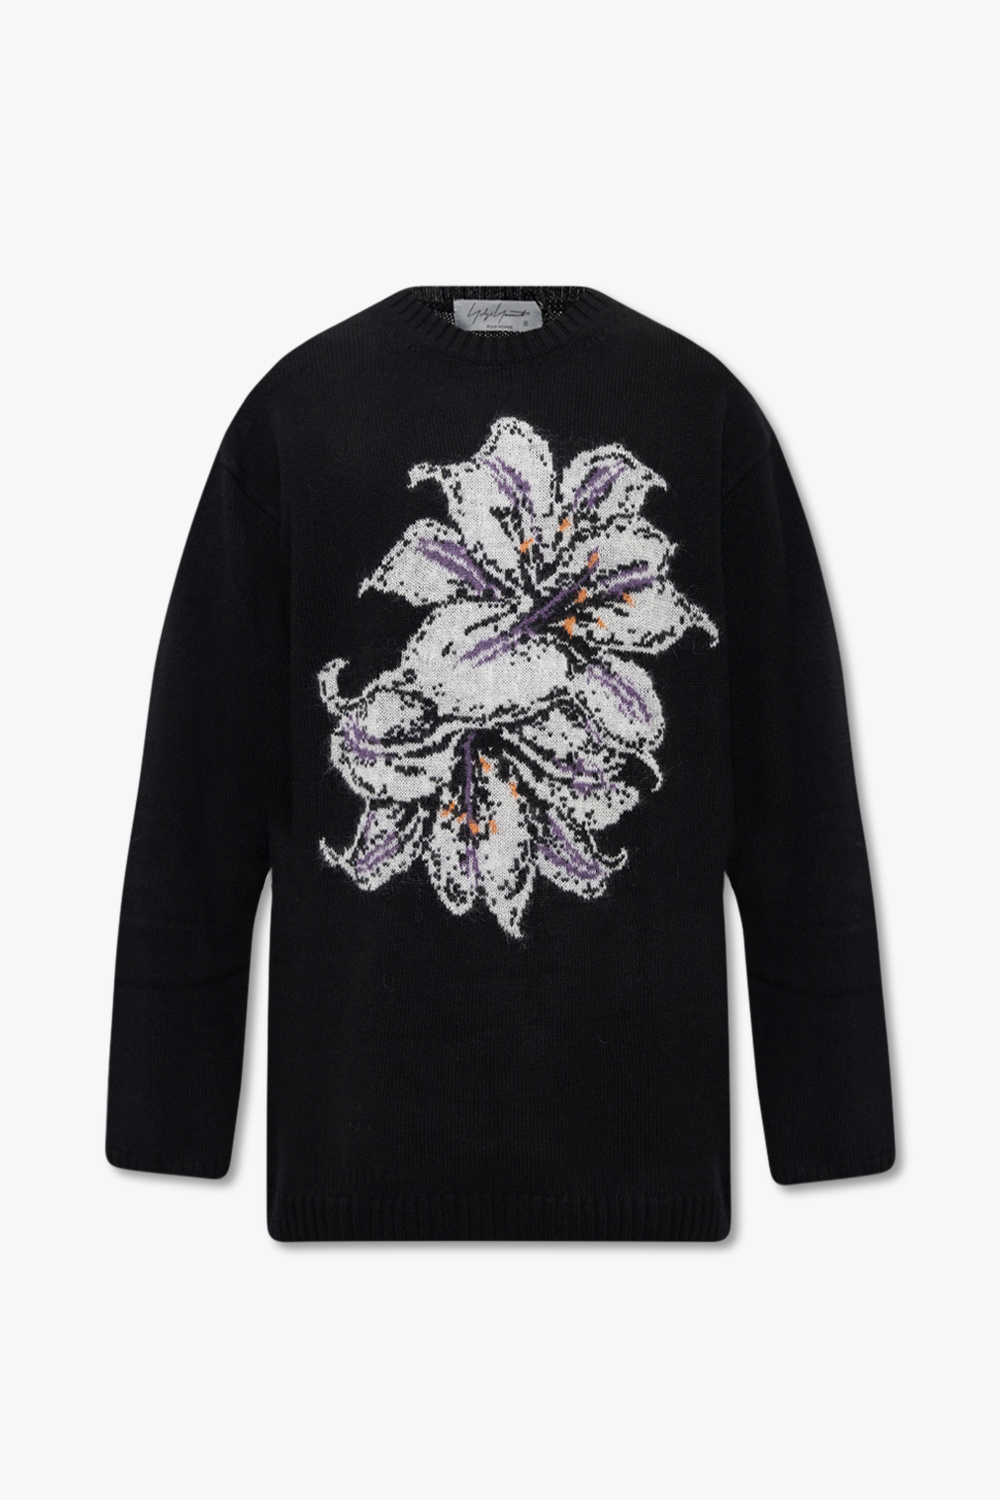 SchaferandweinerShops GB - Sweater with floral motif Yohji Yamamoto -  Sweatshirt dinspiration rétro